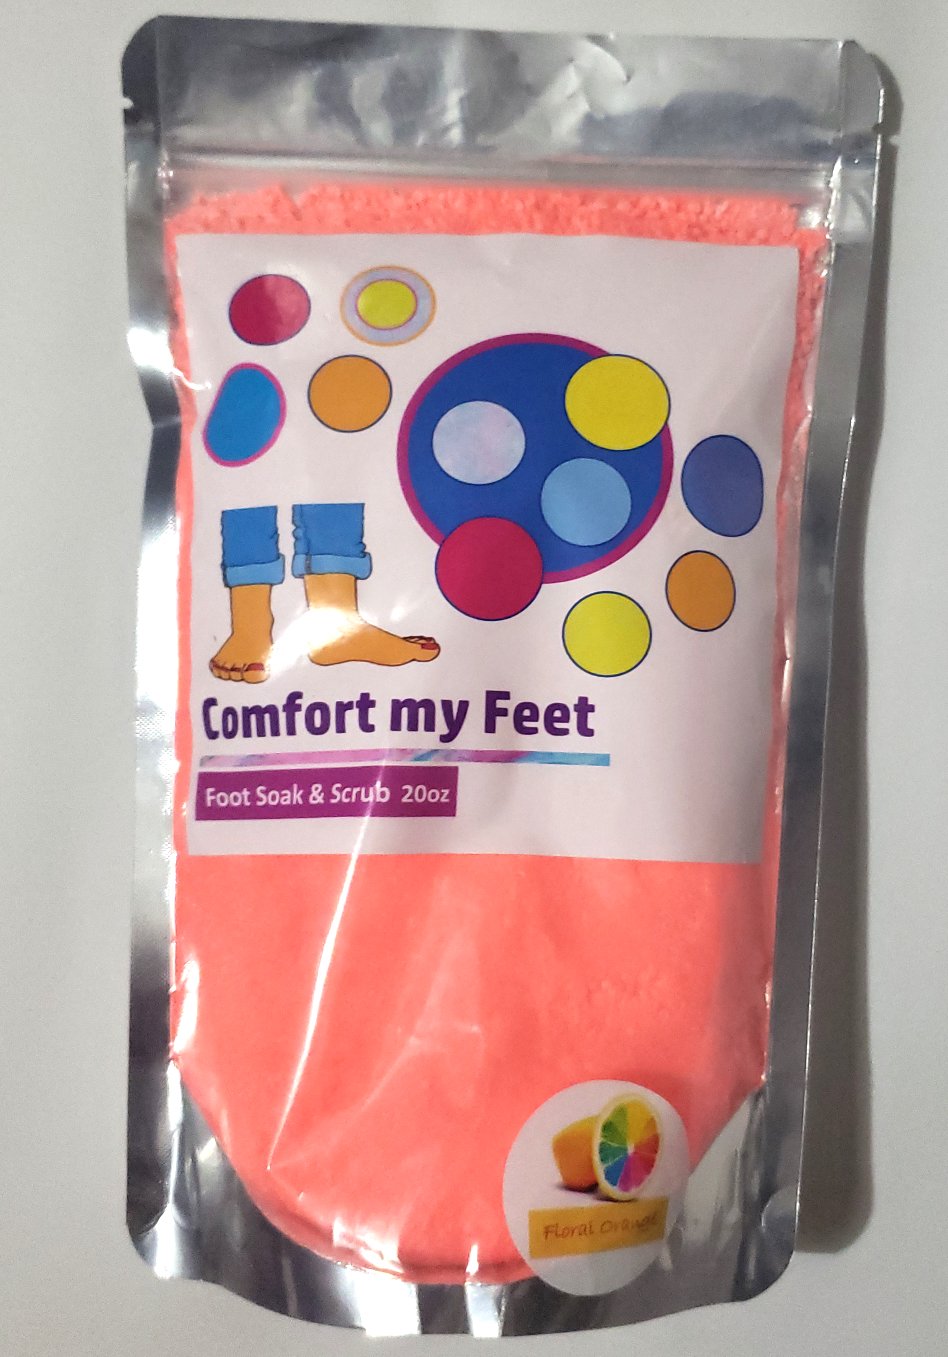 FLORAL ORANGE foot soak